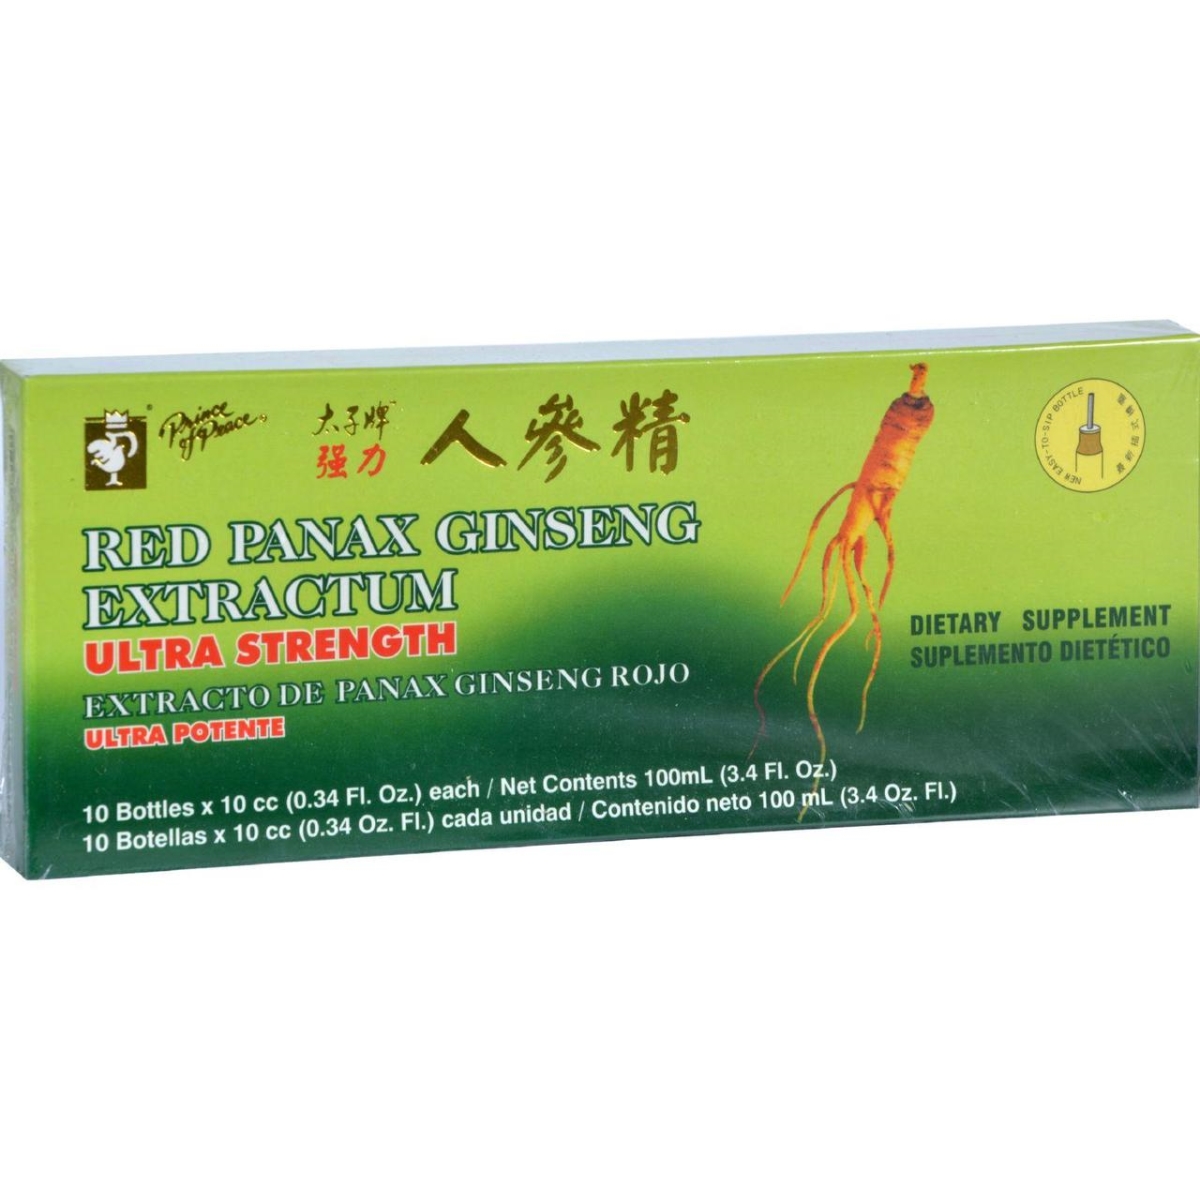 Hg0957456 Red Panax Ginseng Extractum Ultra Strength - 10 Vials